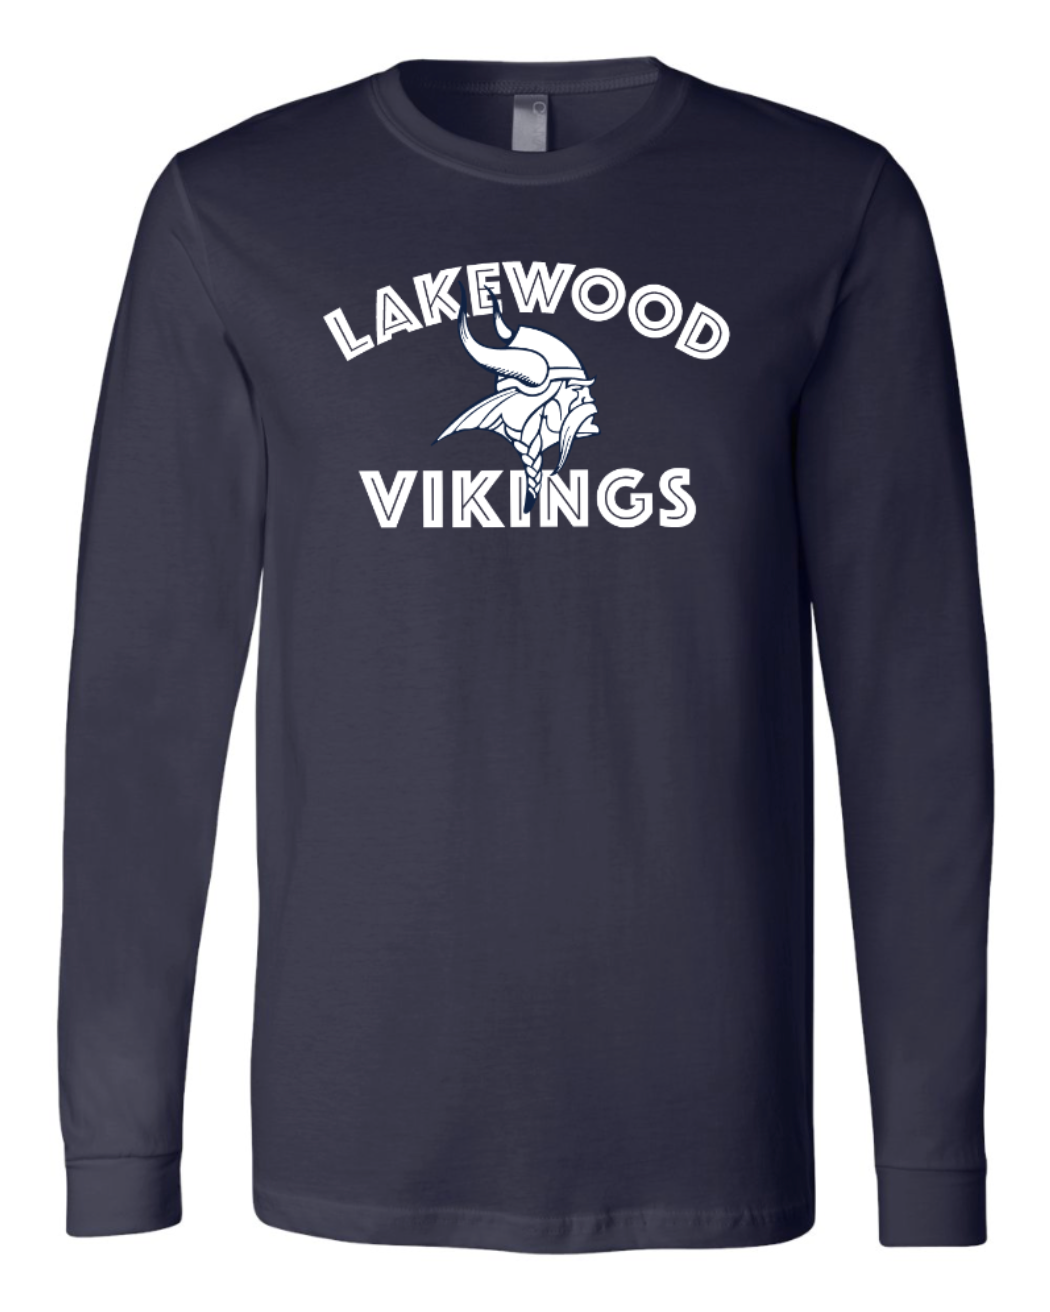 Lakewood Vikings- Unisex Long Sleeve T-Shirt (Arch Design